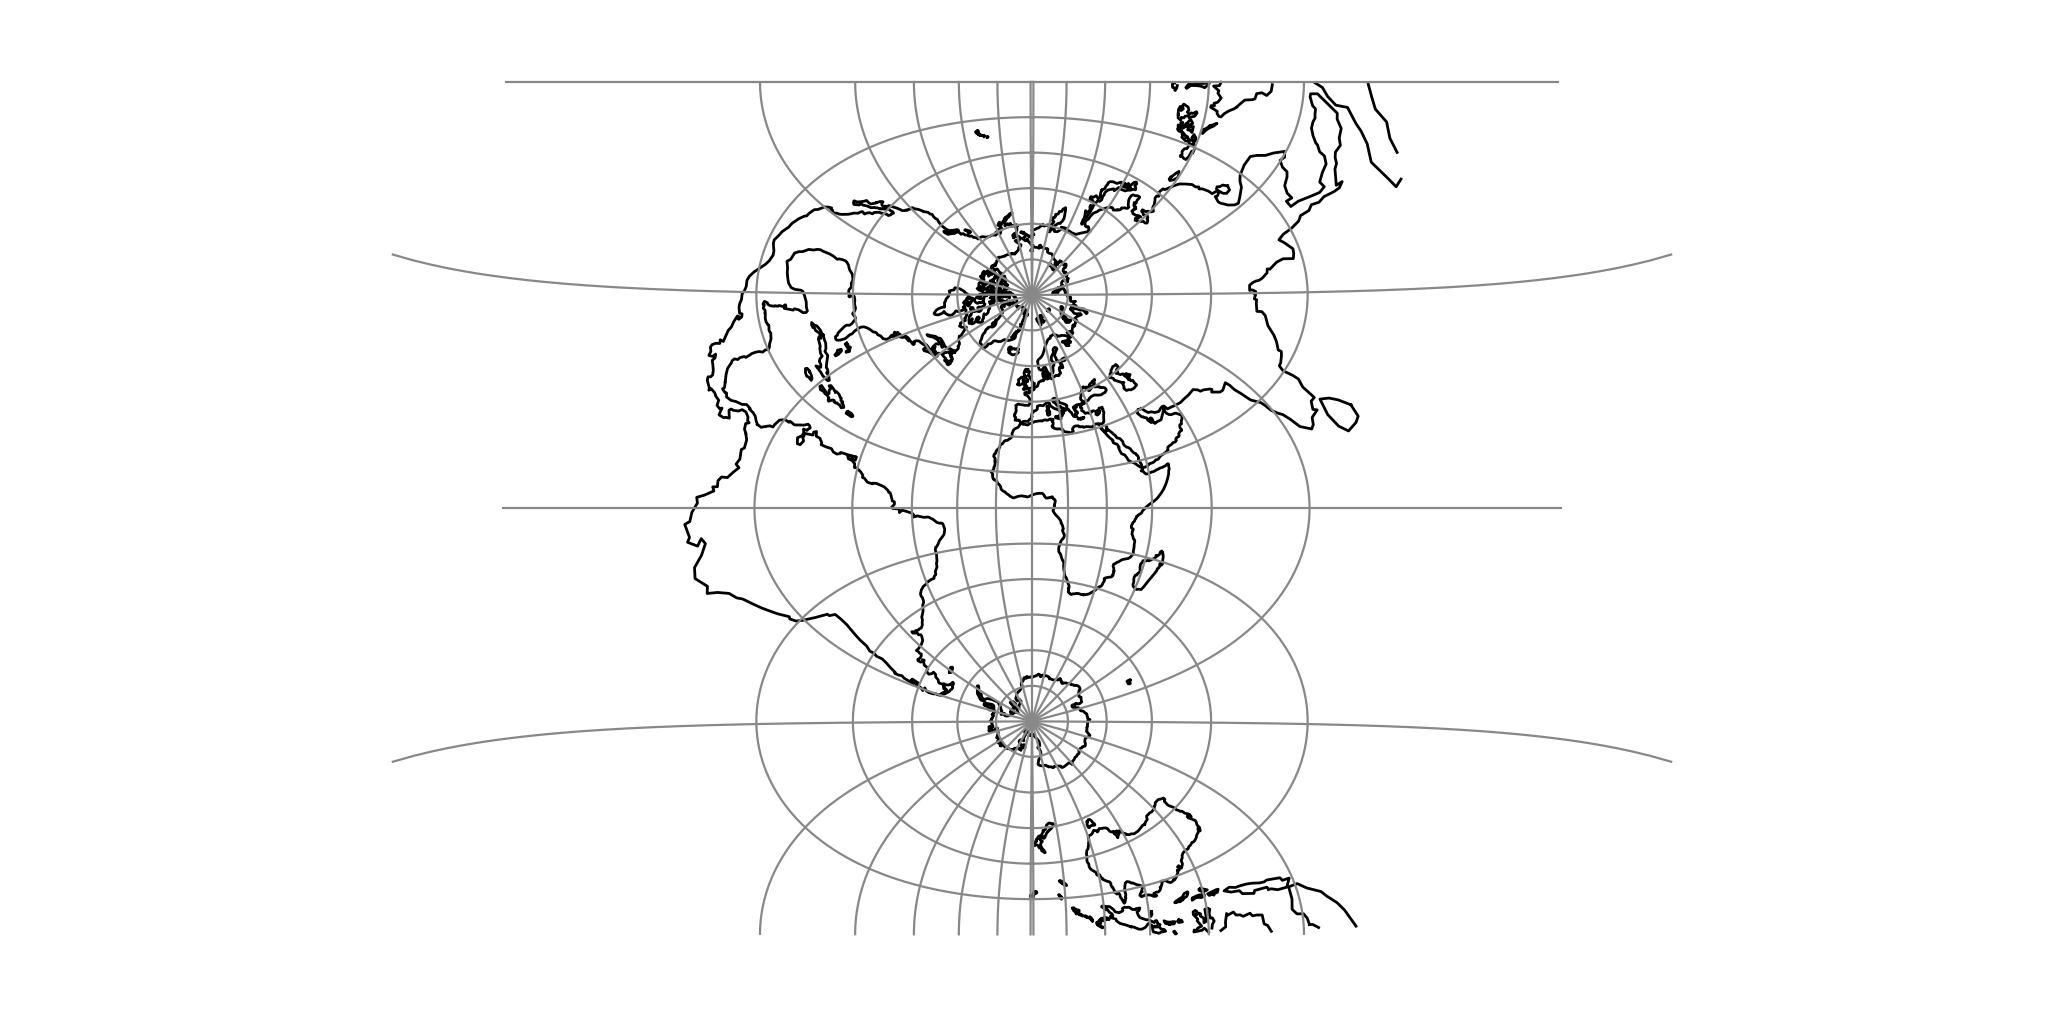 Oblique Mercator